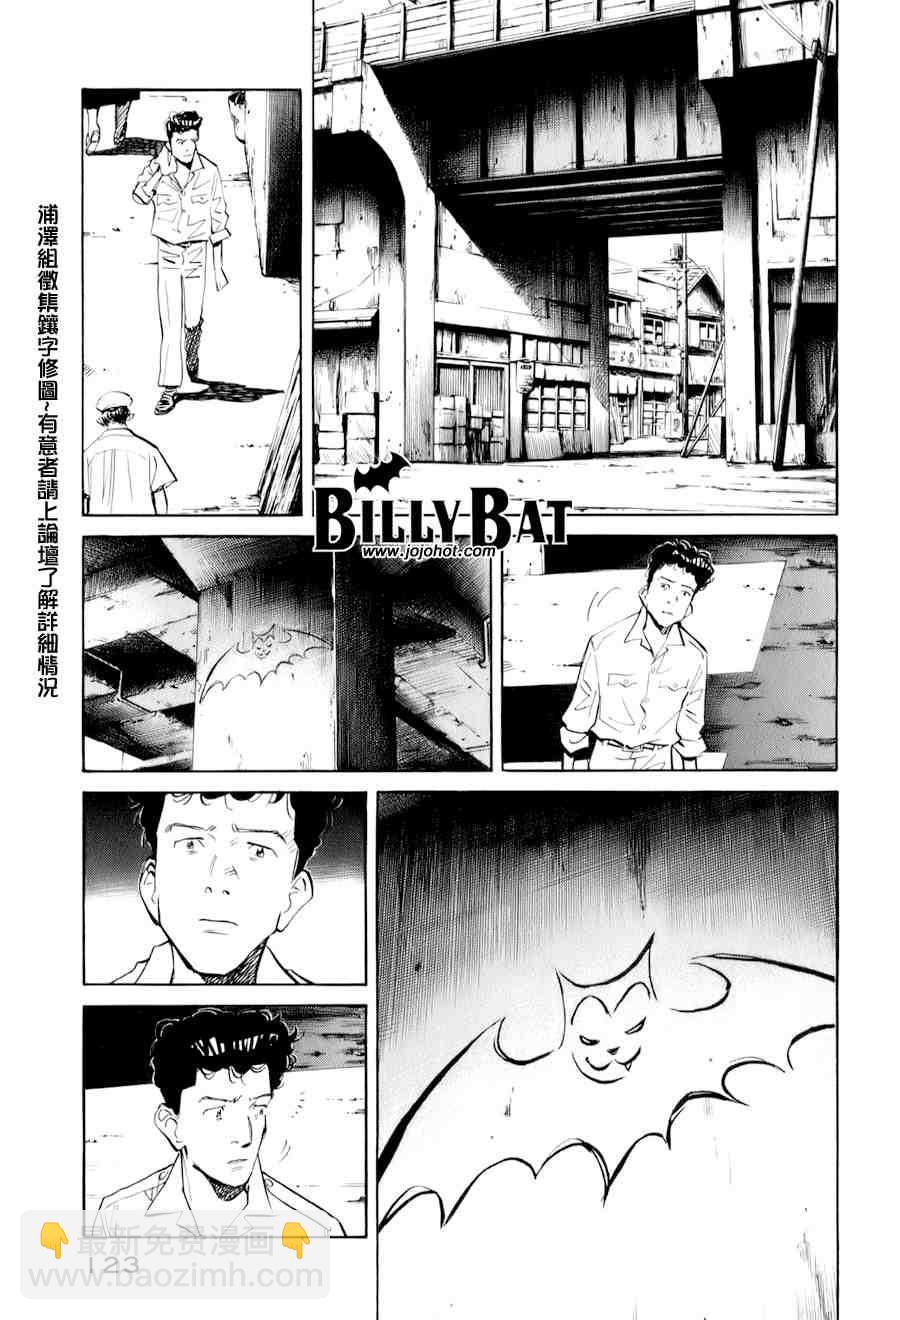 Billy_Bat - 第1卷(3/4) - 2